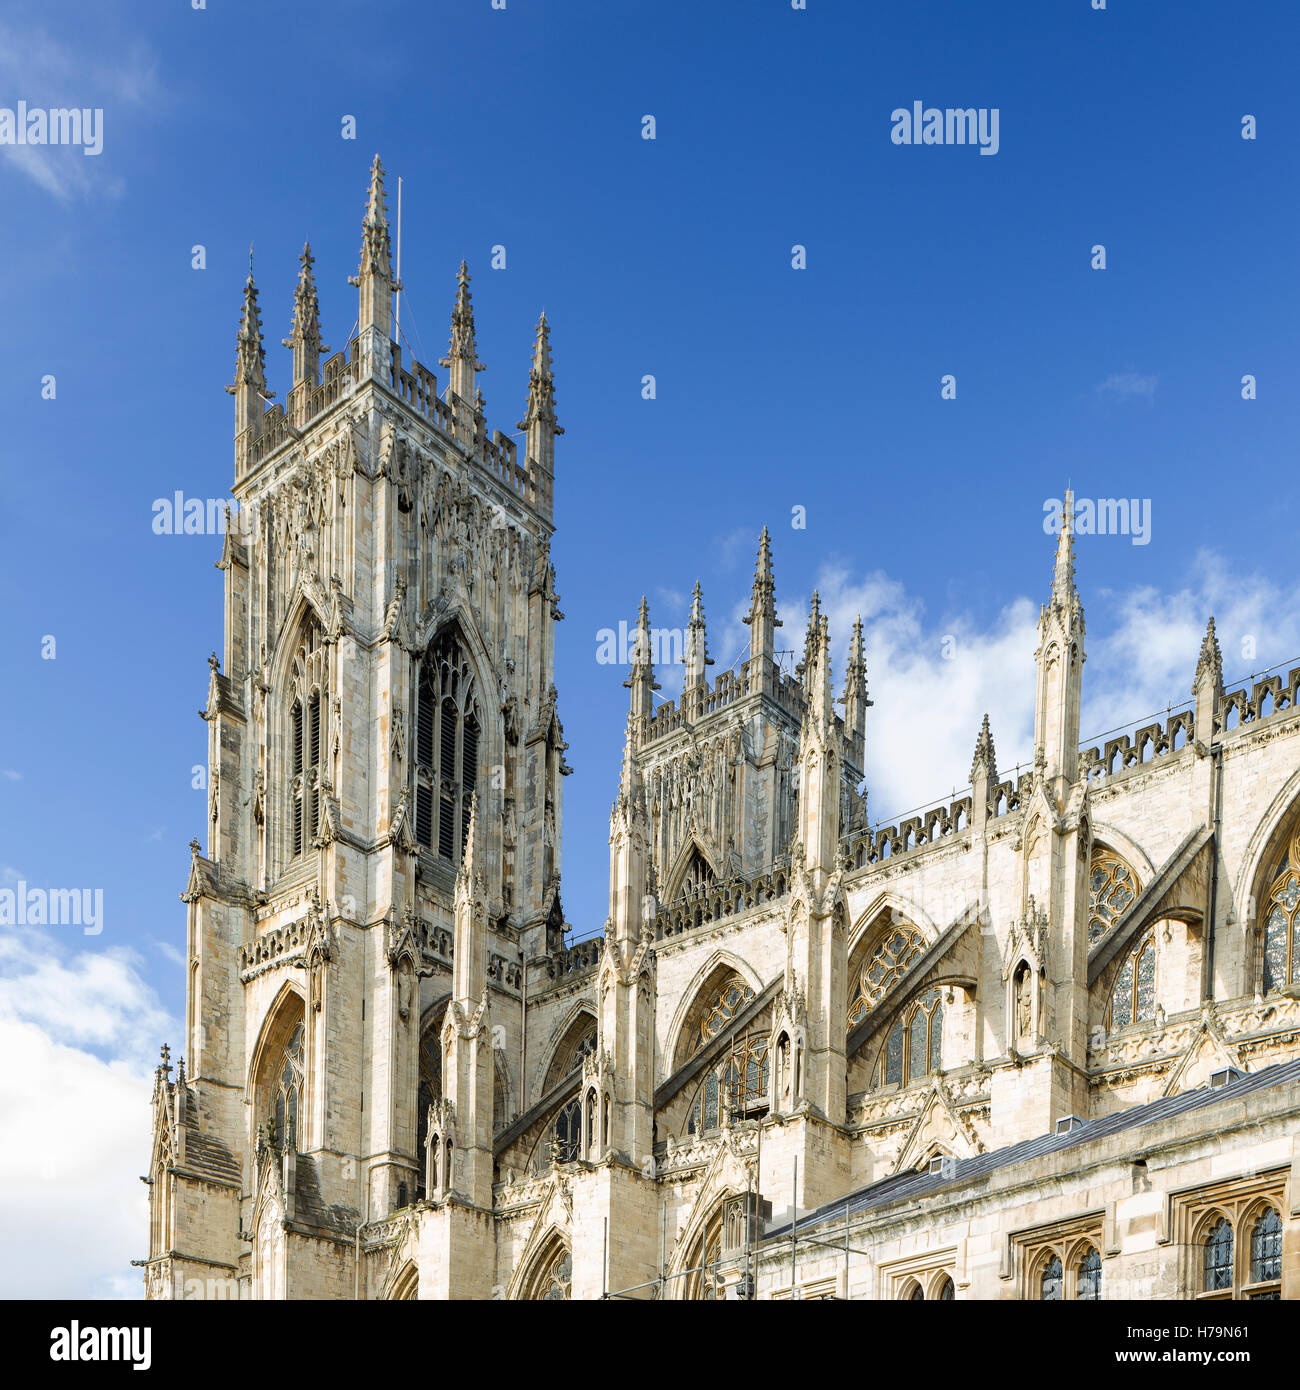 Les clochers de York Minster, York, North Yorkshire, UK. Banque D'Images